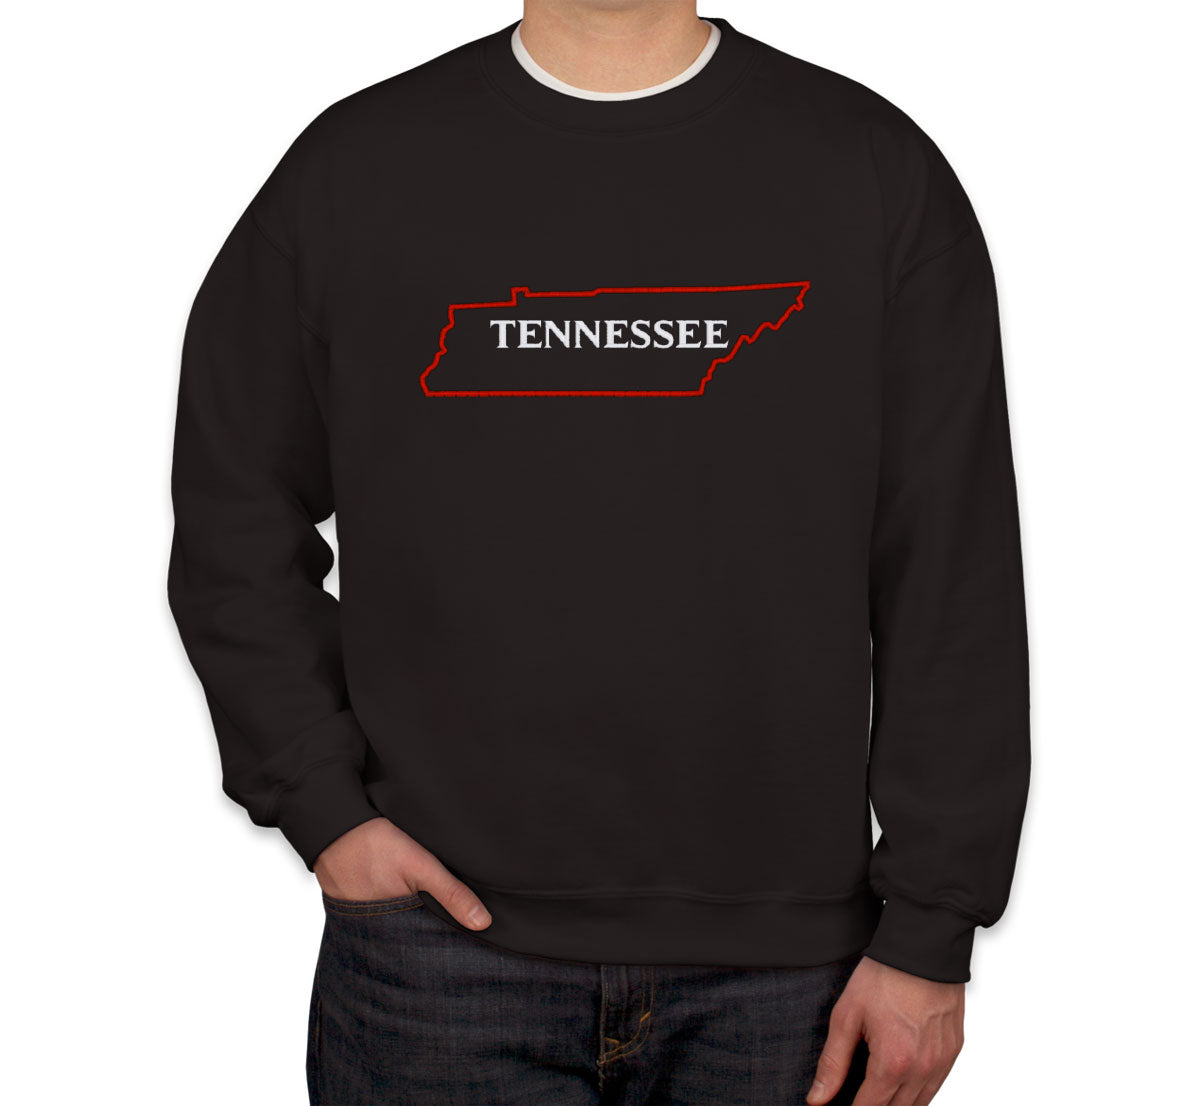 Tennessee Embroidered Unisex Sweatshirt